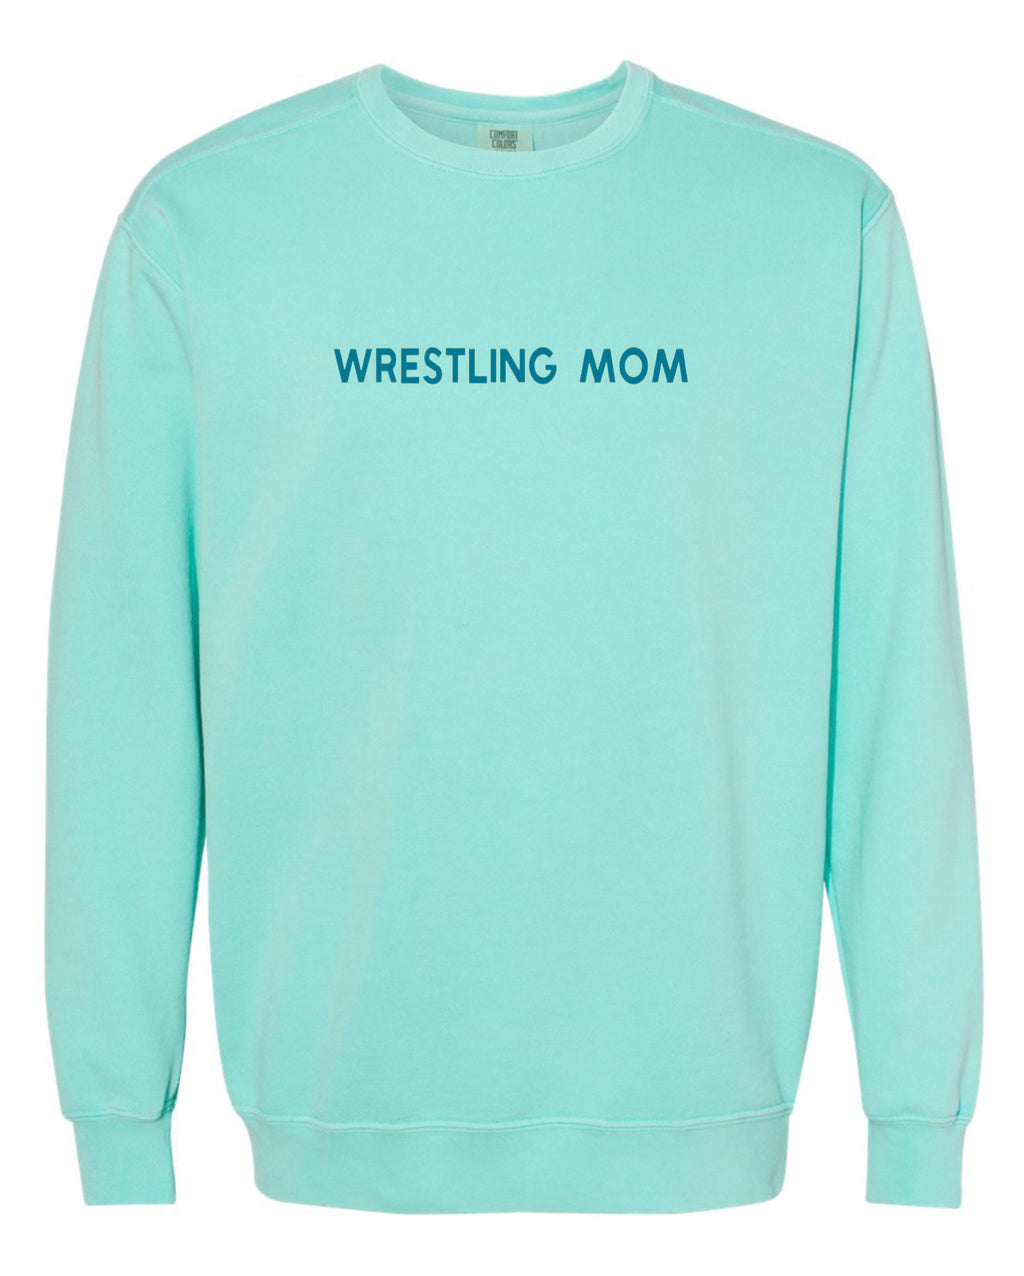 Wrestling Mom Comfort Colors Sweatshirt